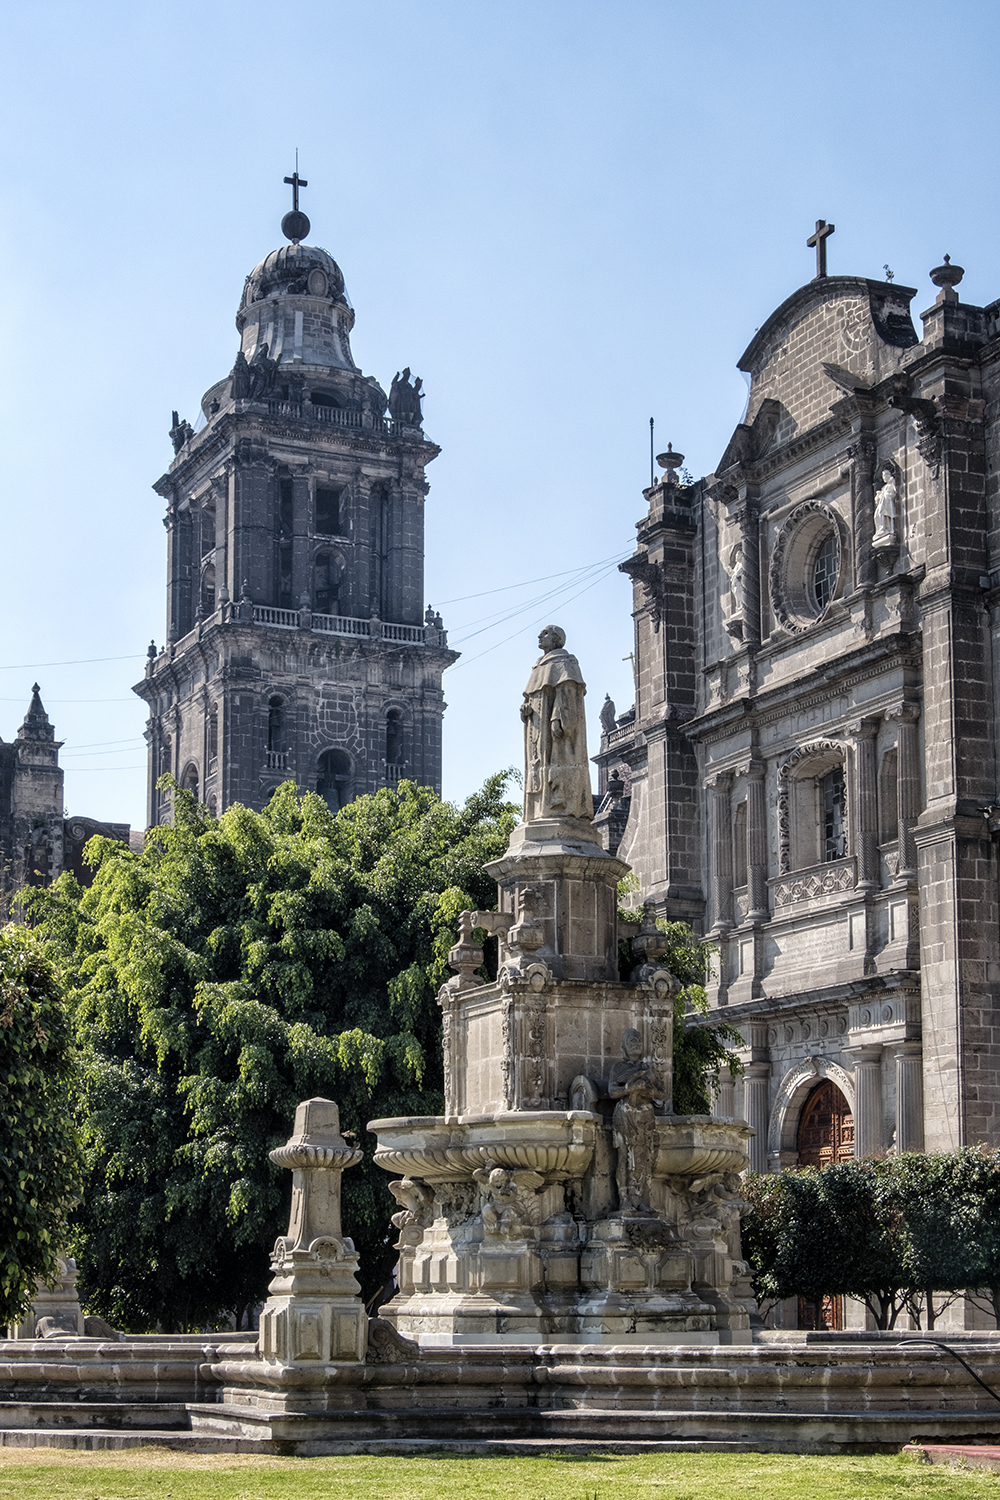 Metropolitan Cathedral, Mexico City